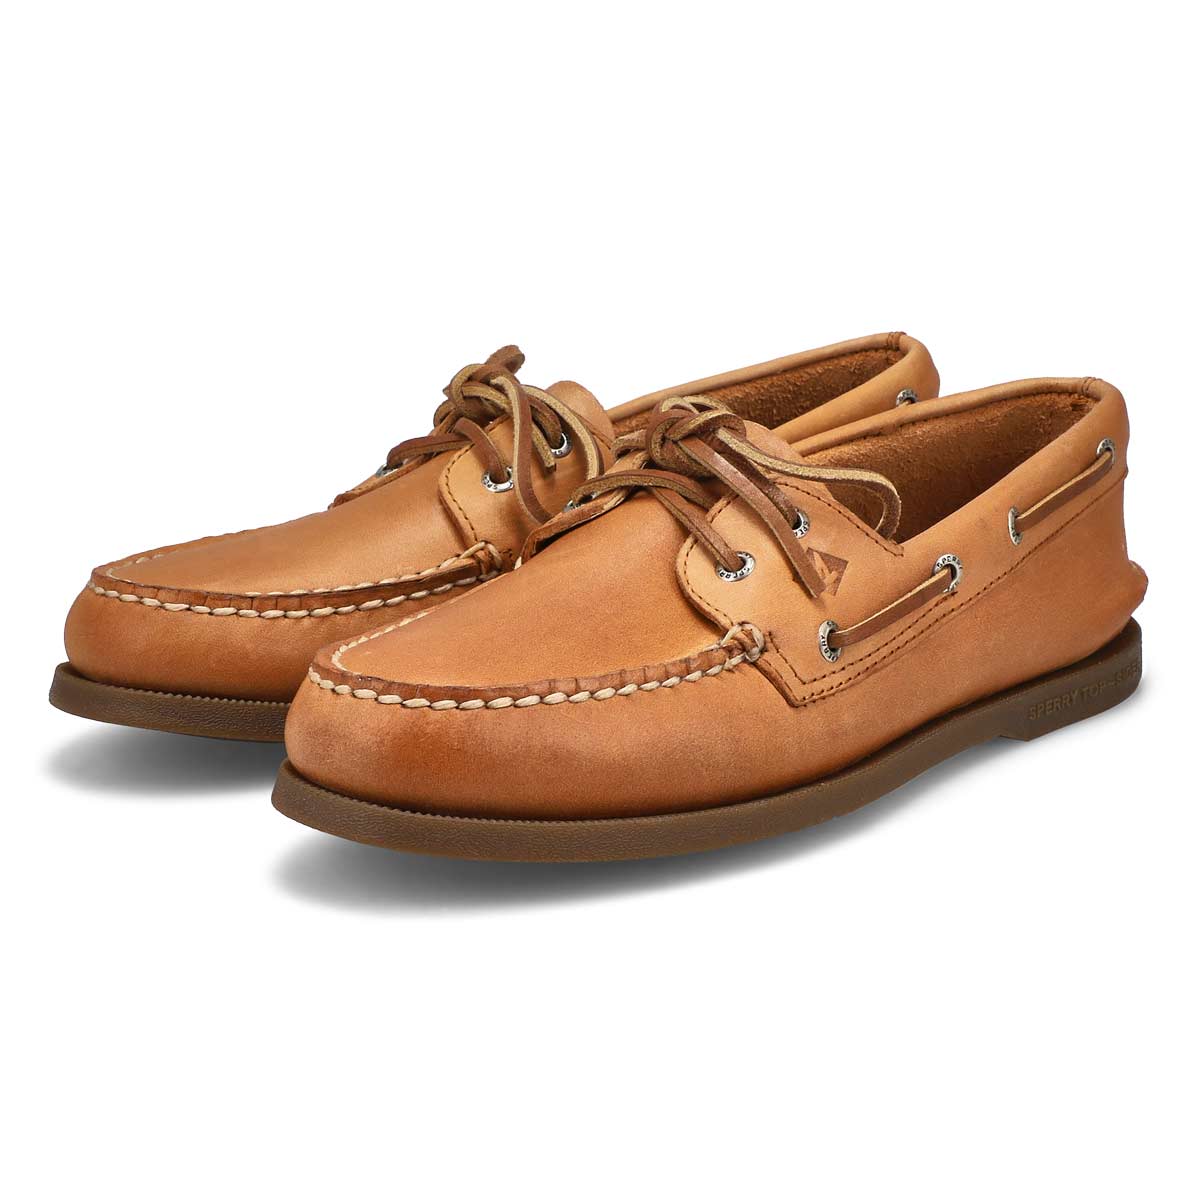 Sperry Men's Authentic Original Boat Shoe/Sahara Leather, 47% OFF